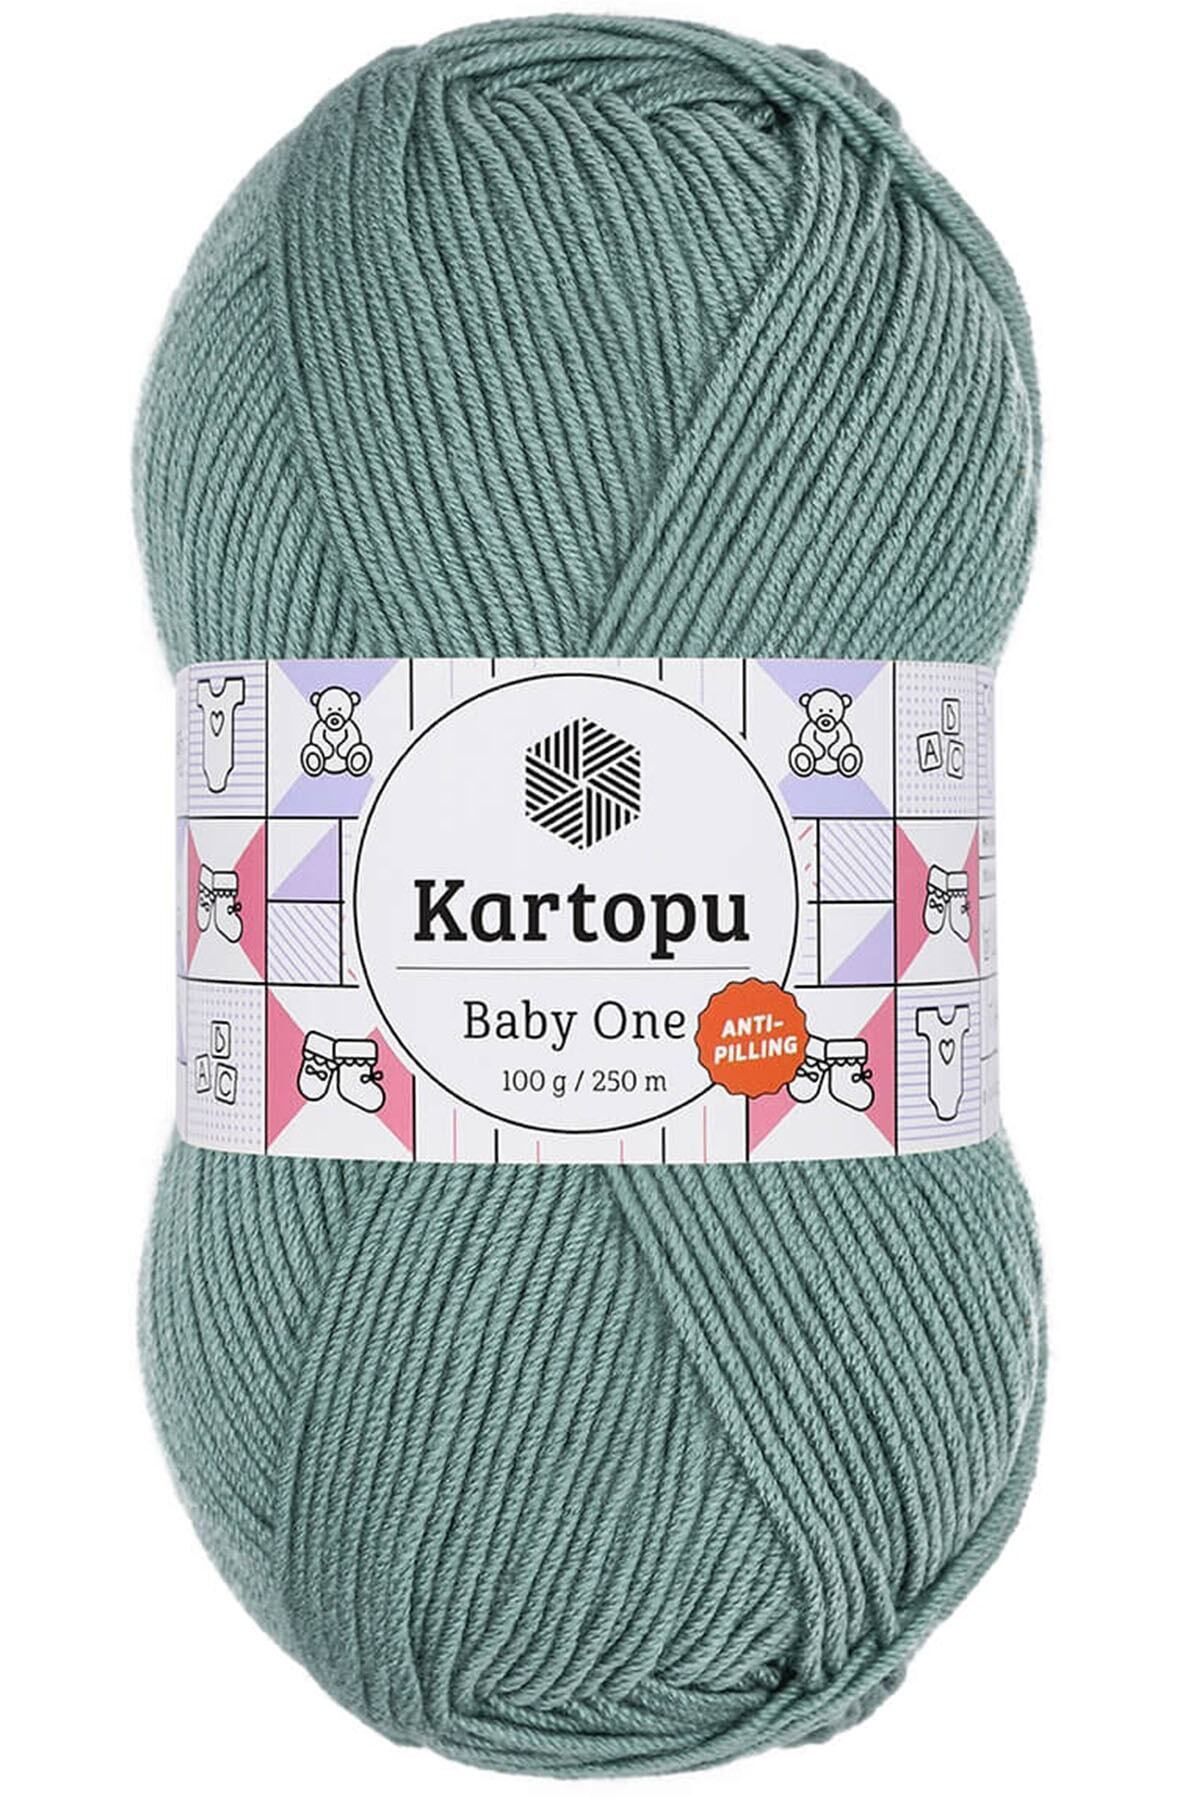 Kartopu Baby One Tüylenmeyen Bebek Yünü Mint Yeşili K493